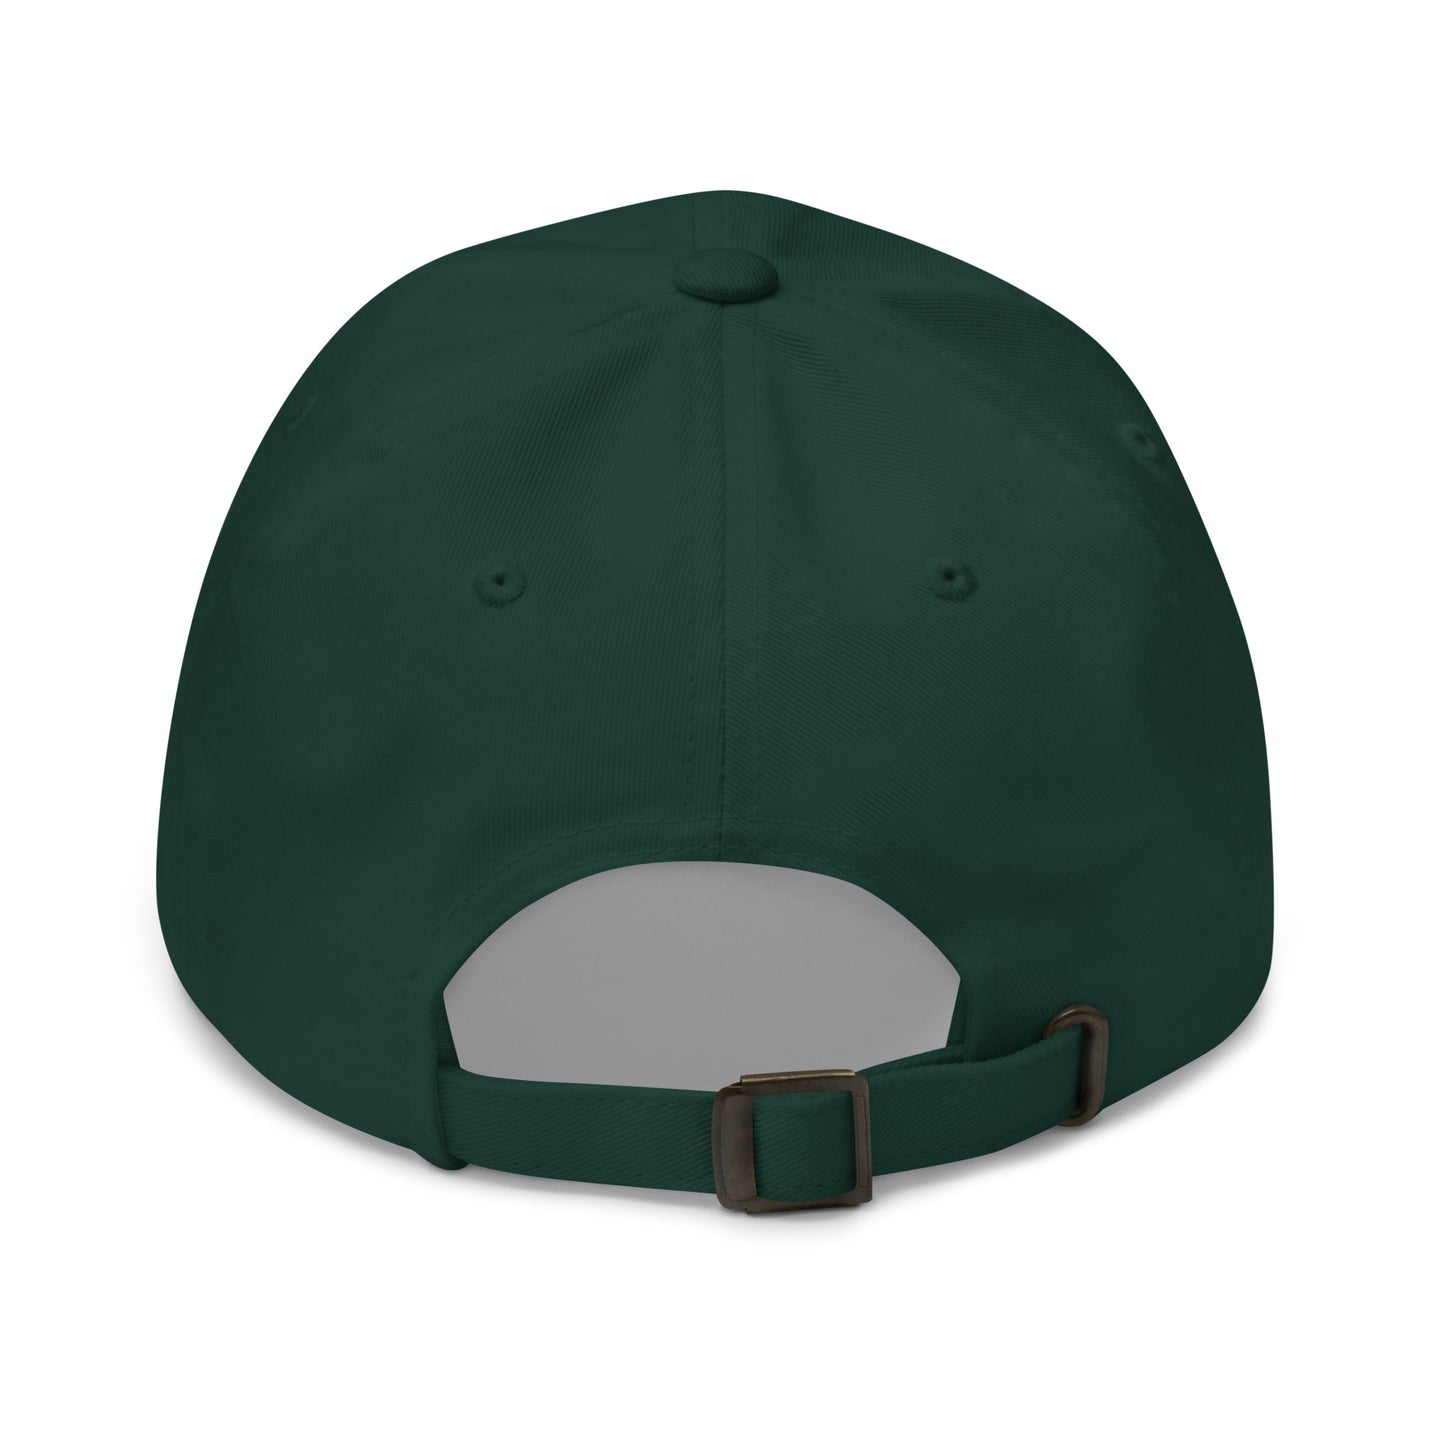 Designlab hat